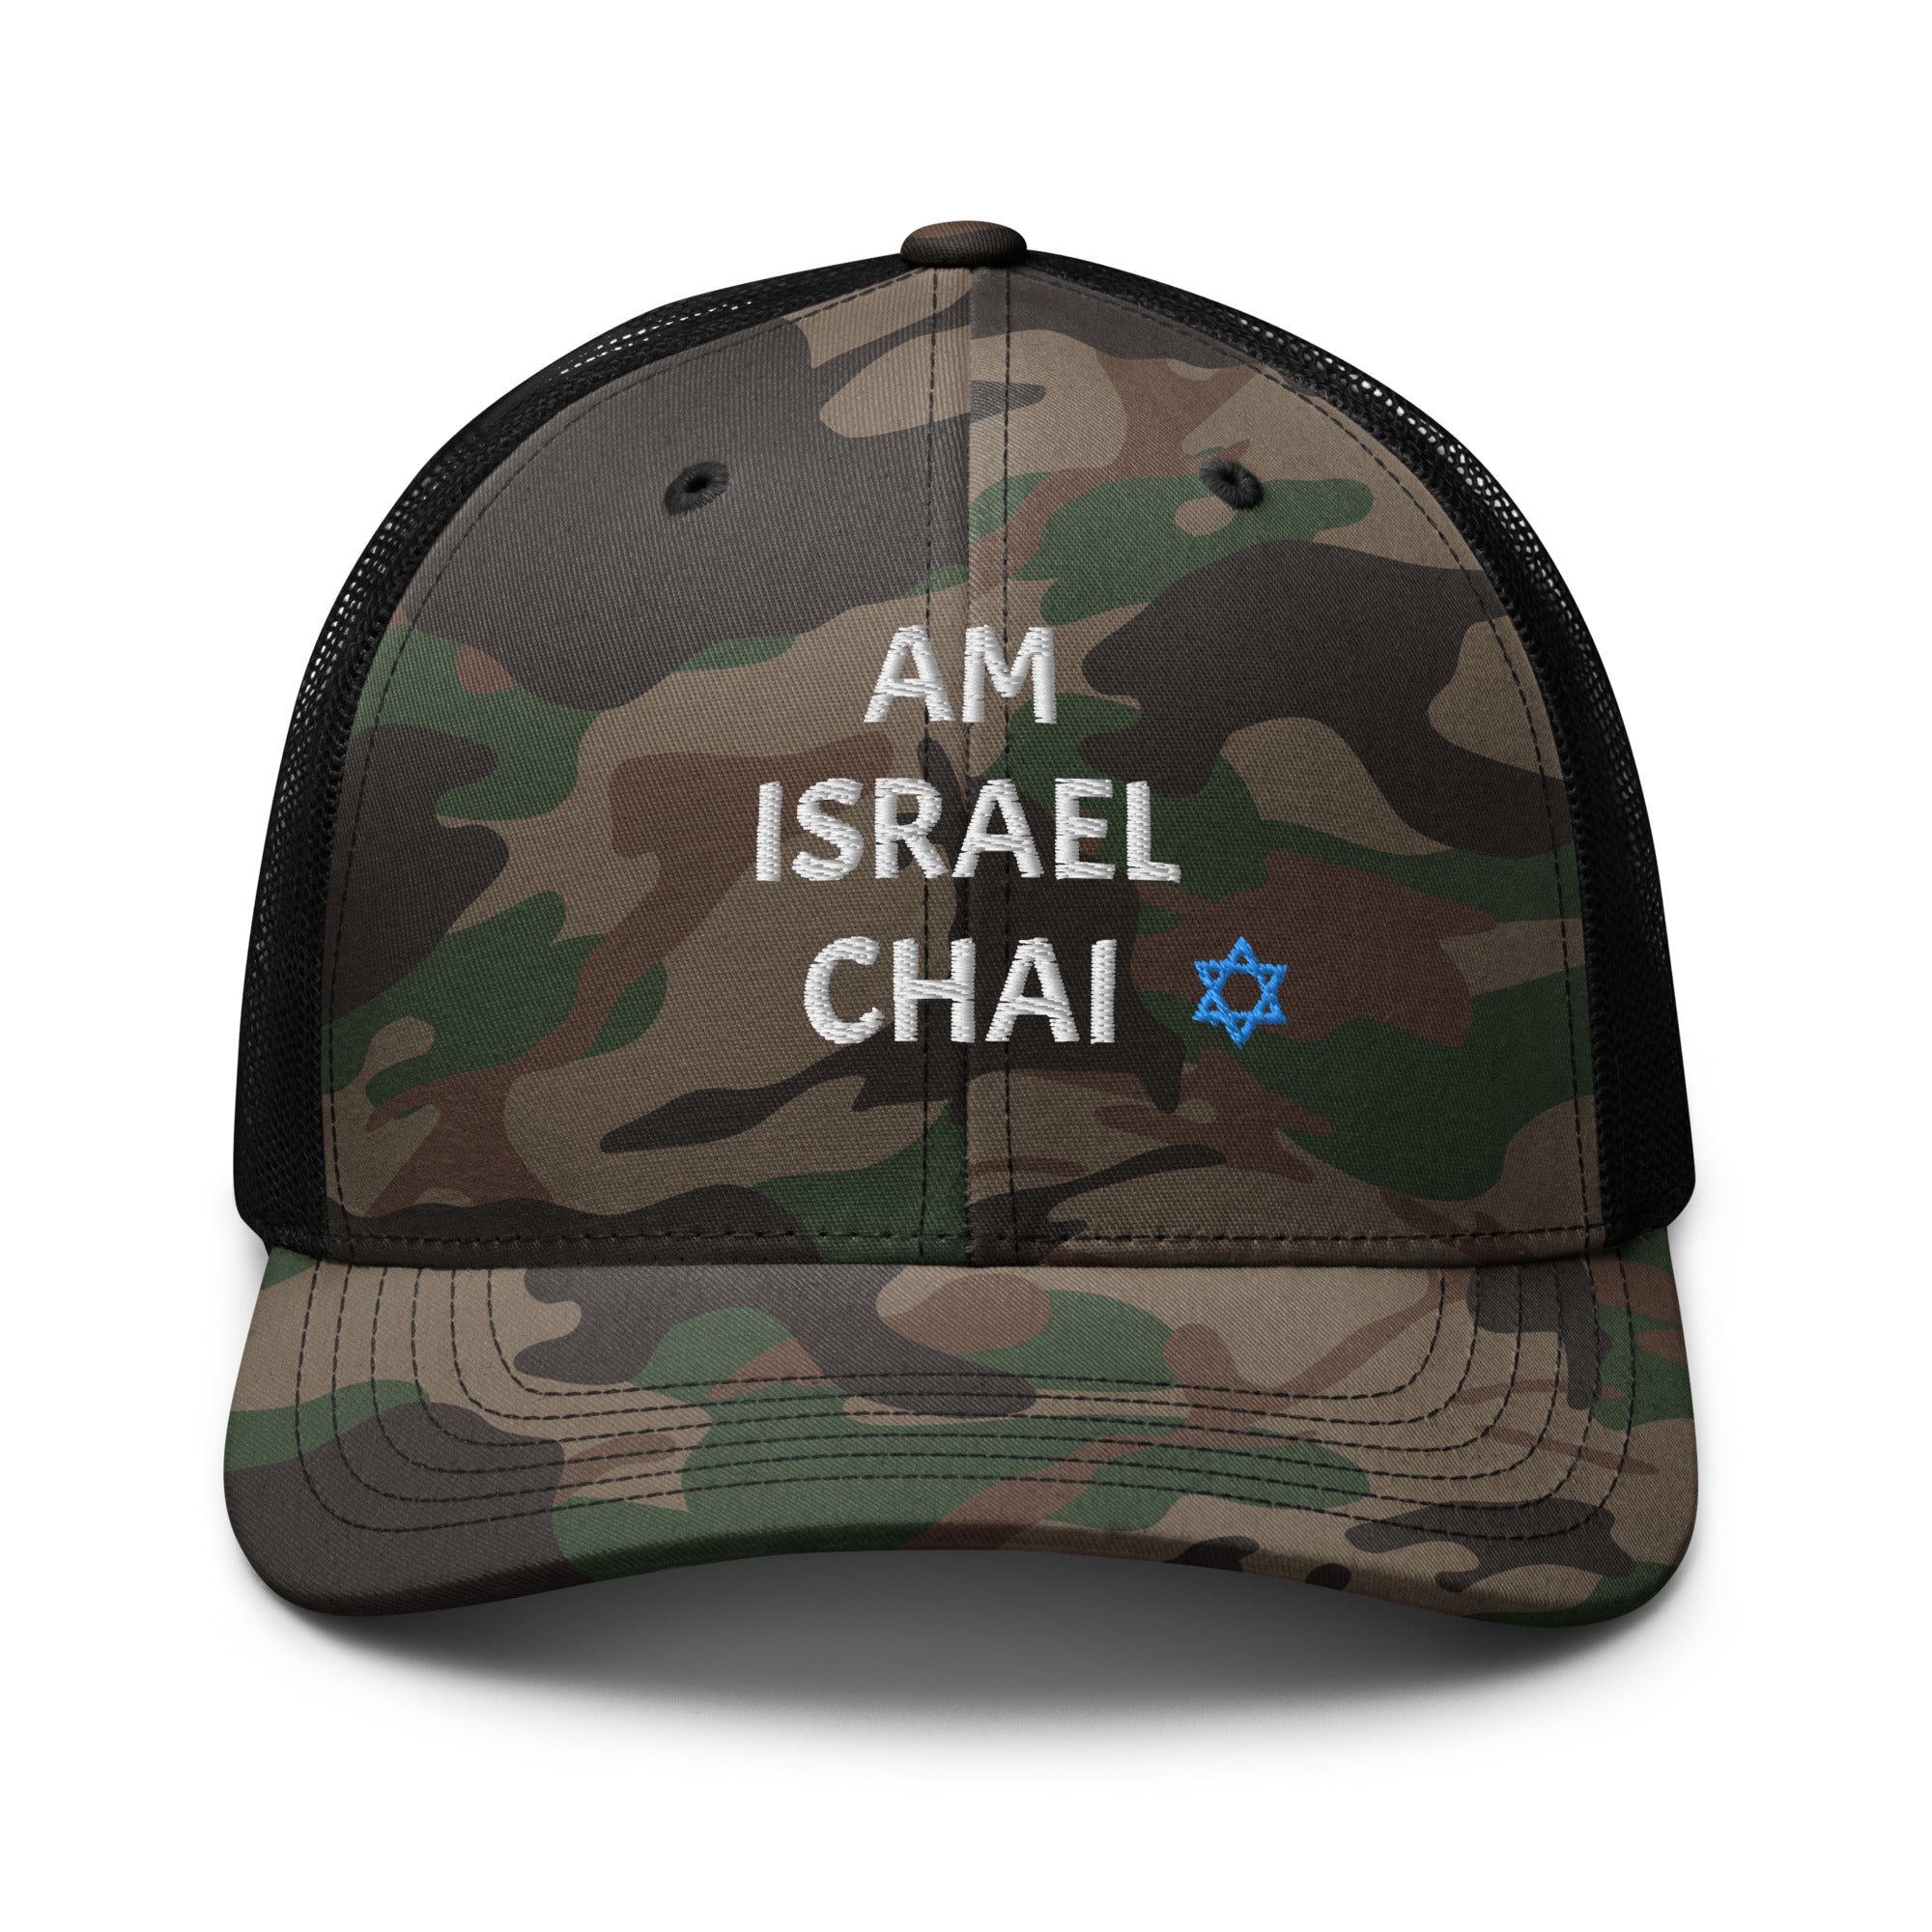 Am Israel Chai - Camouflage trucker hat